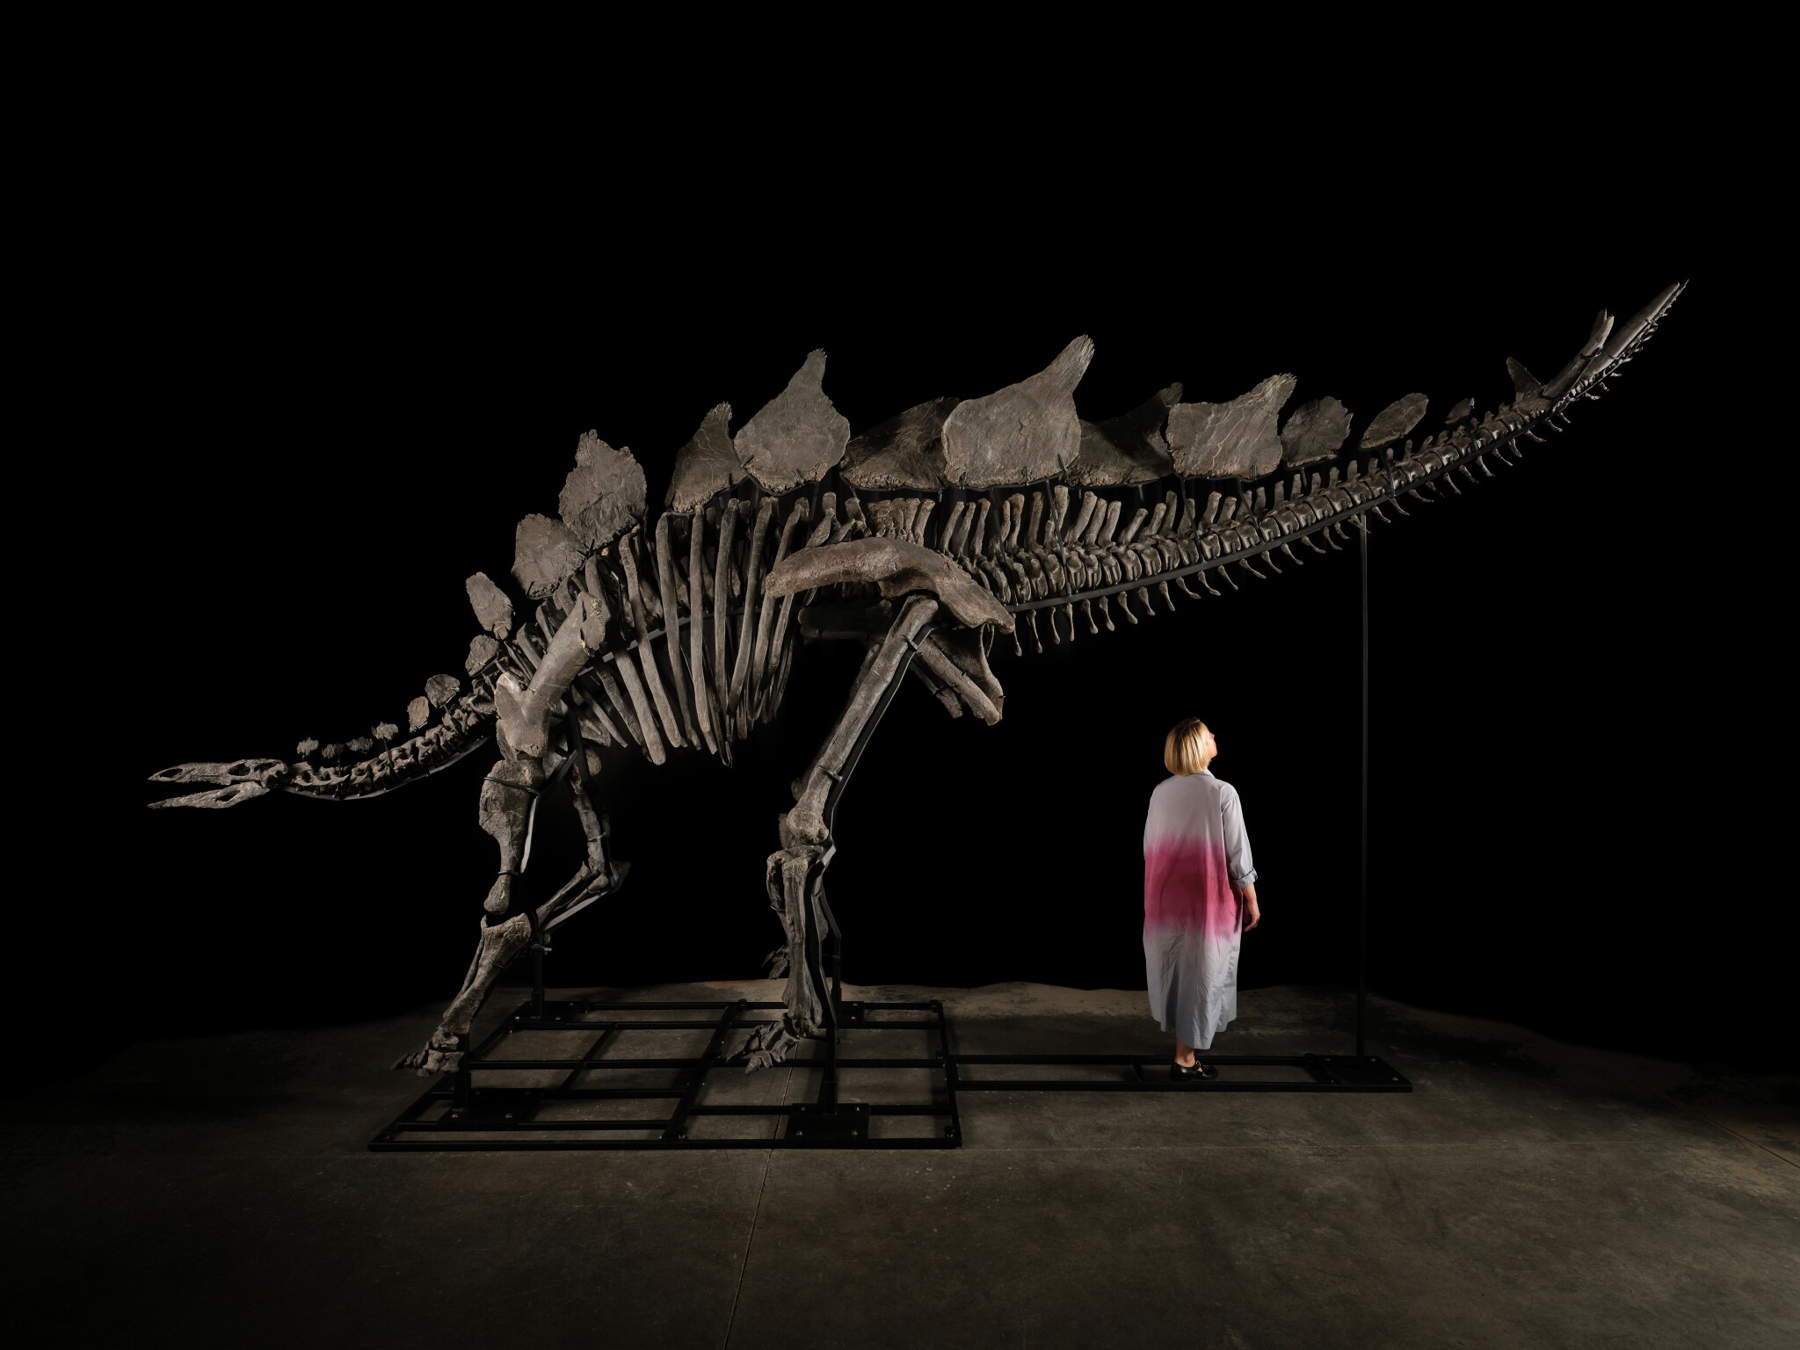 A complete stegosaurus skeleton goes up for sale at Sotheby's